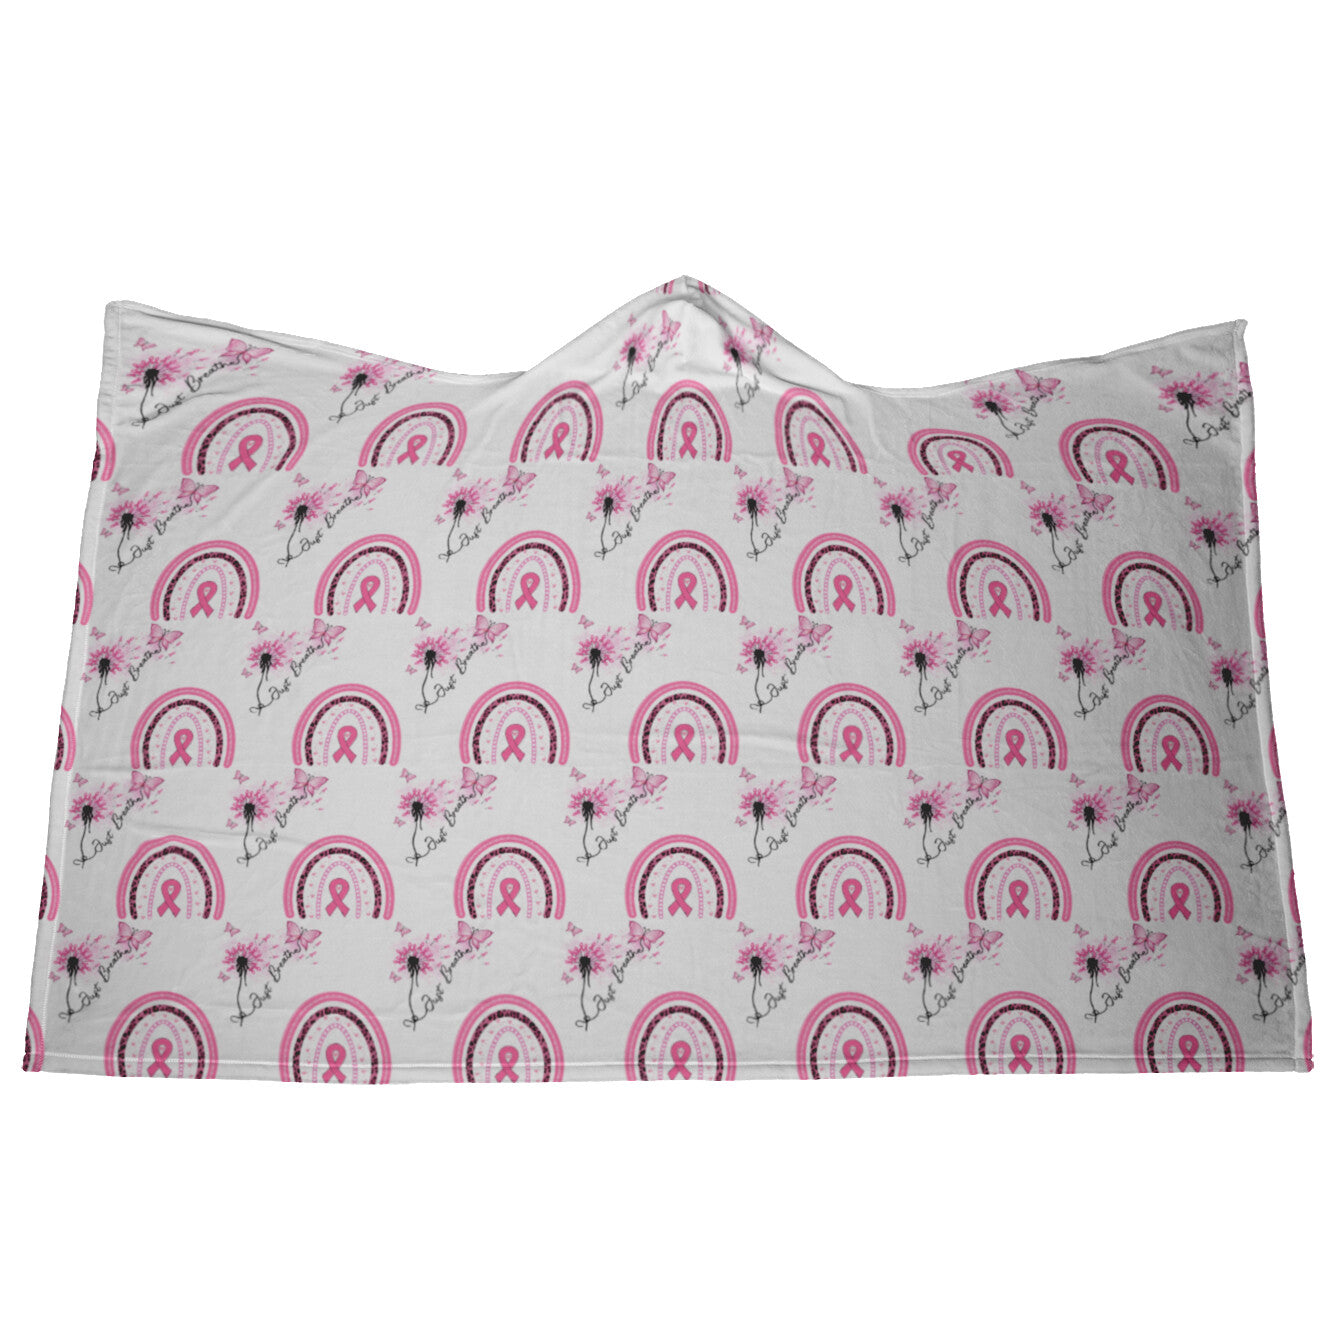 Hooded Breast Cancer Awareness Blanket